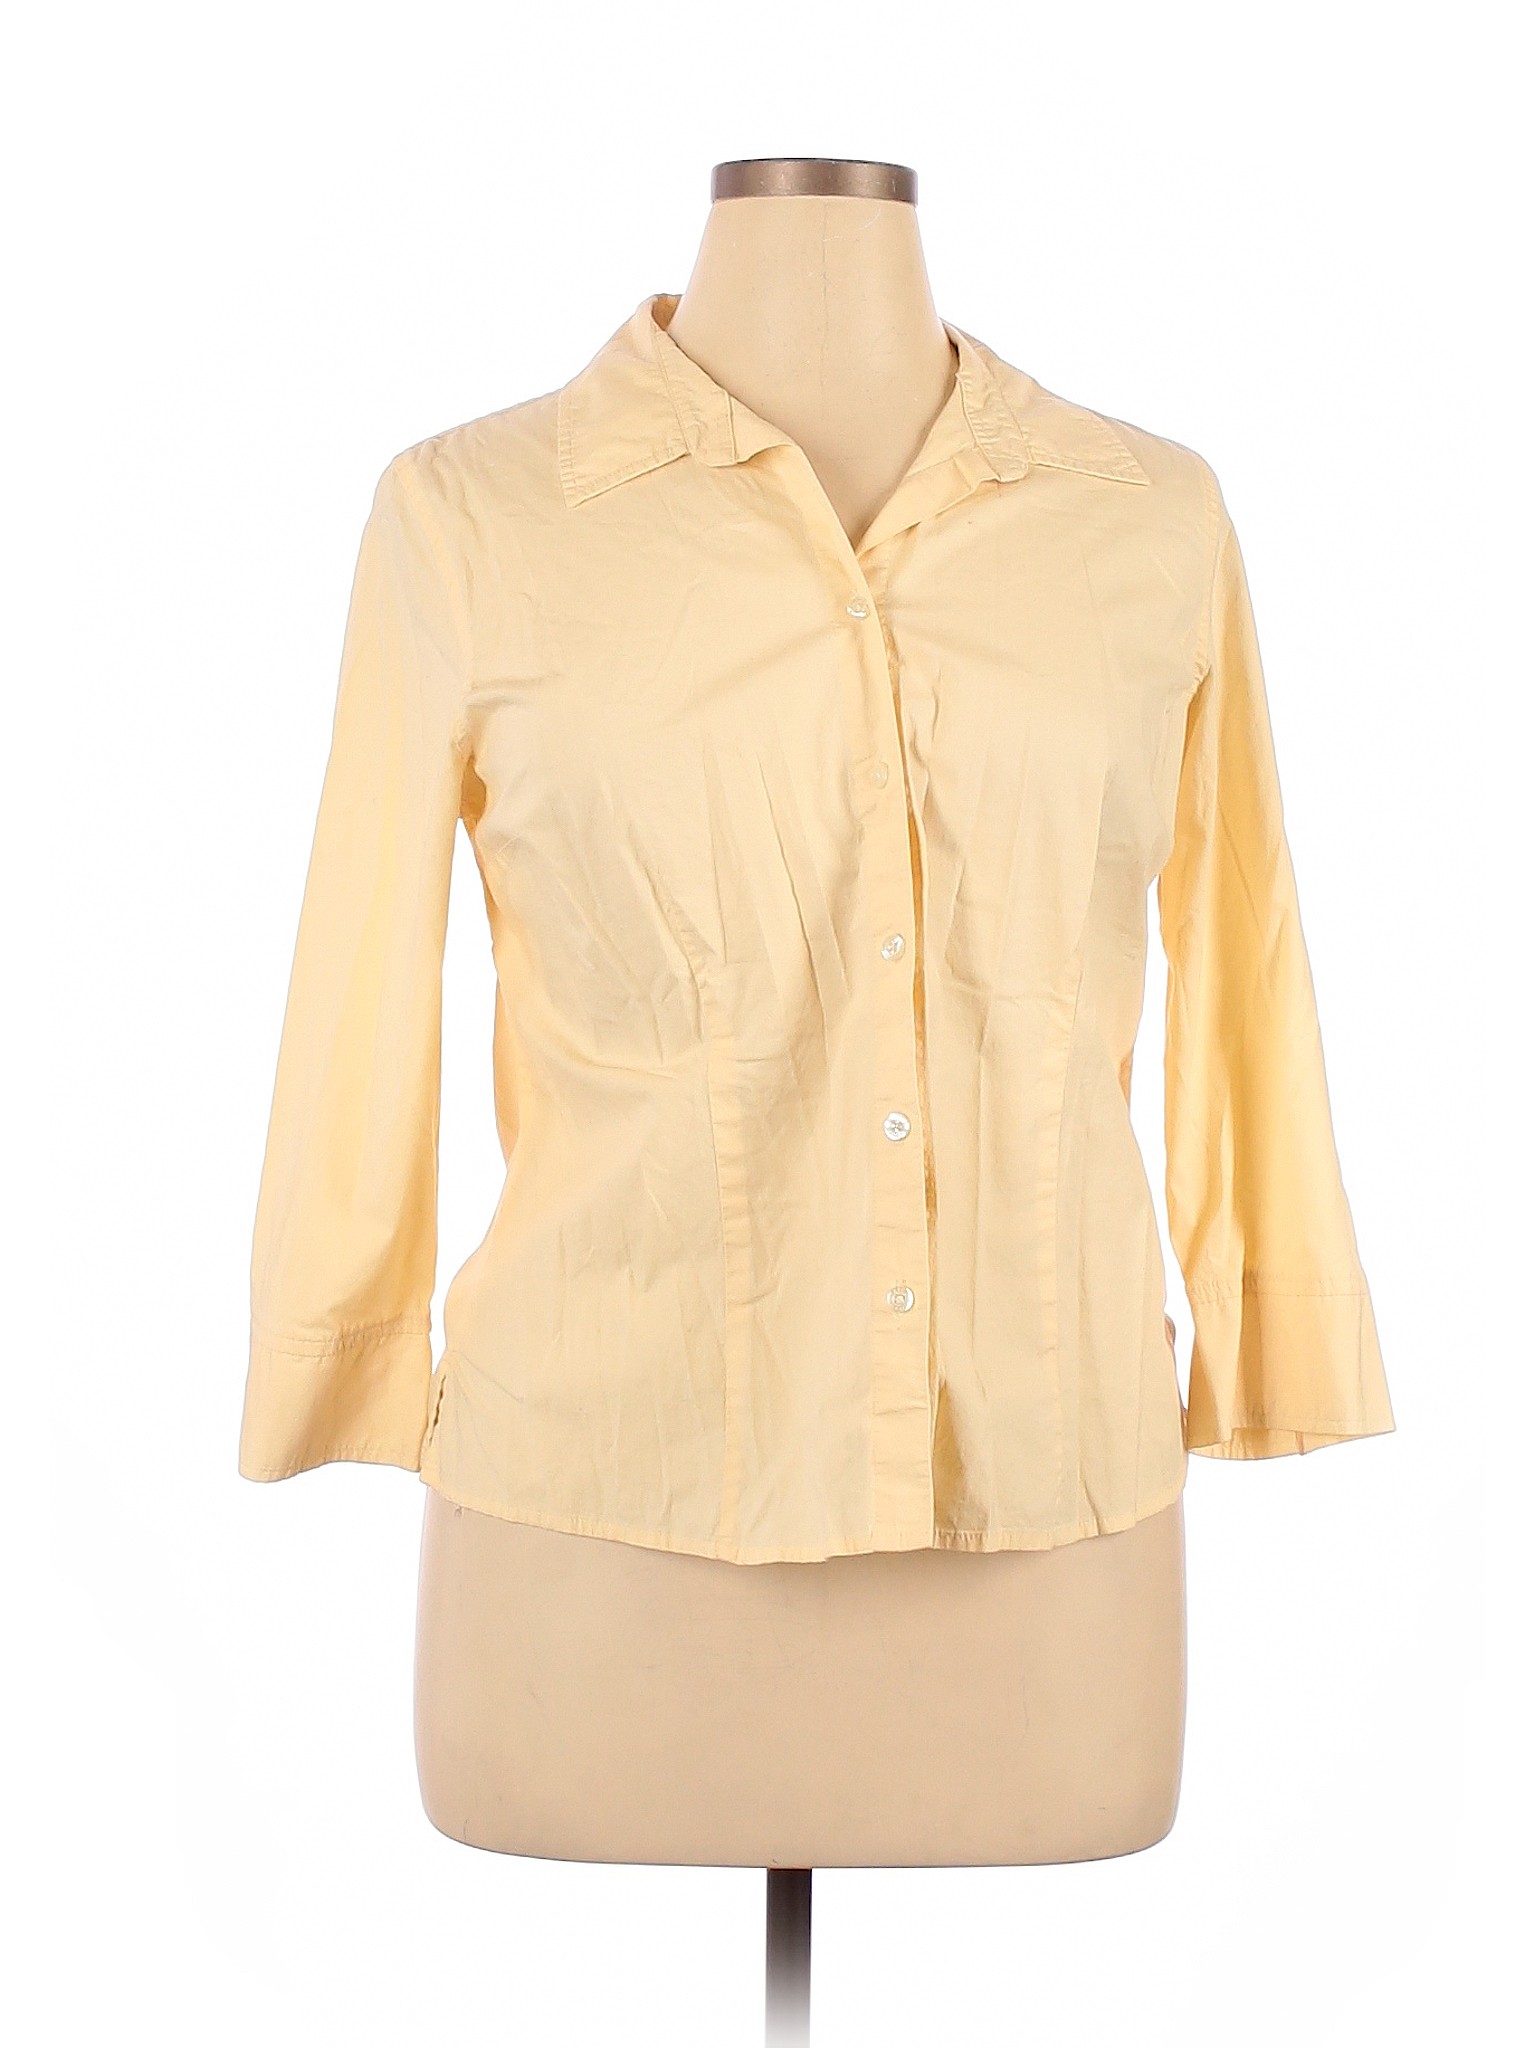 Croft & Barrow Women Yellow 3/4 Sleeve Button-Down Shirt XL | eBay